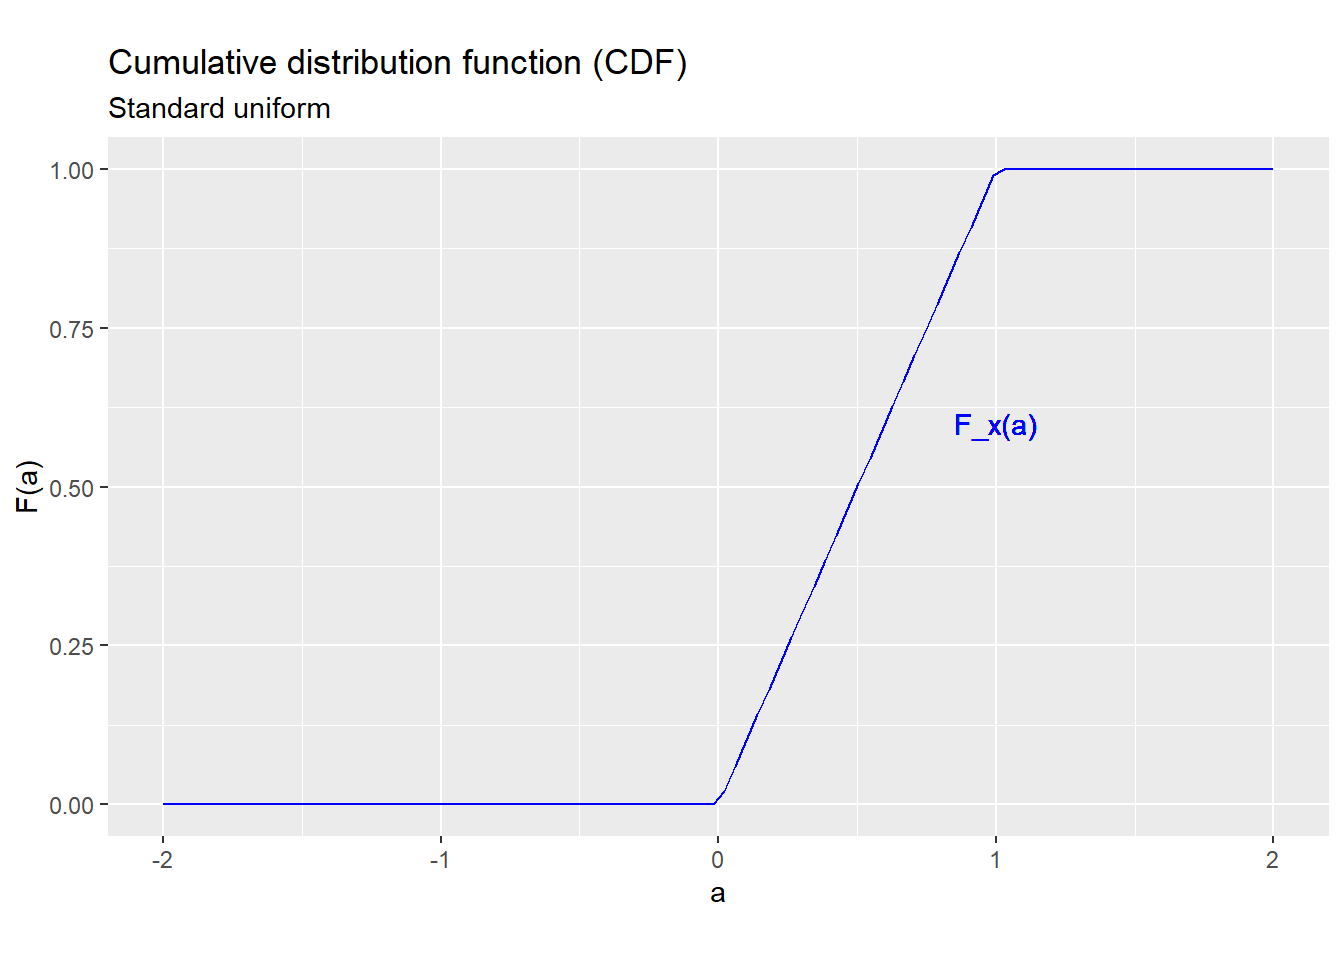 *CDF for the standard uniform distribution*